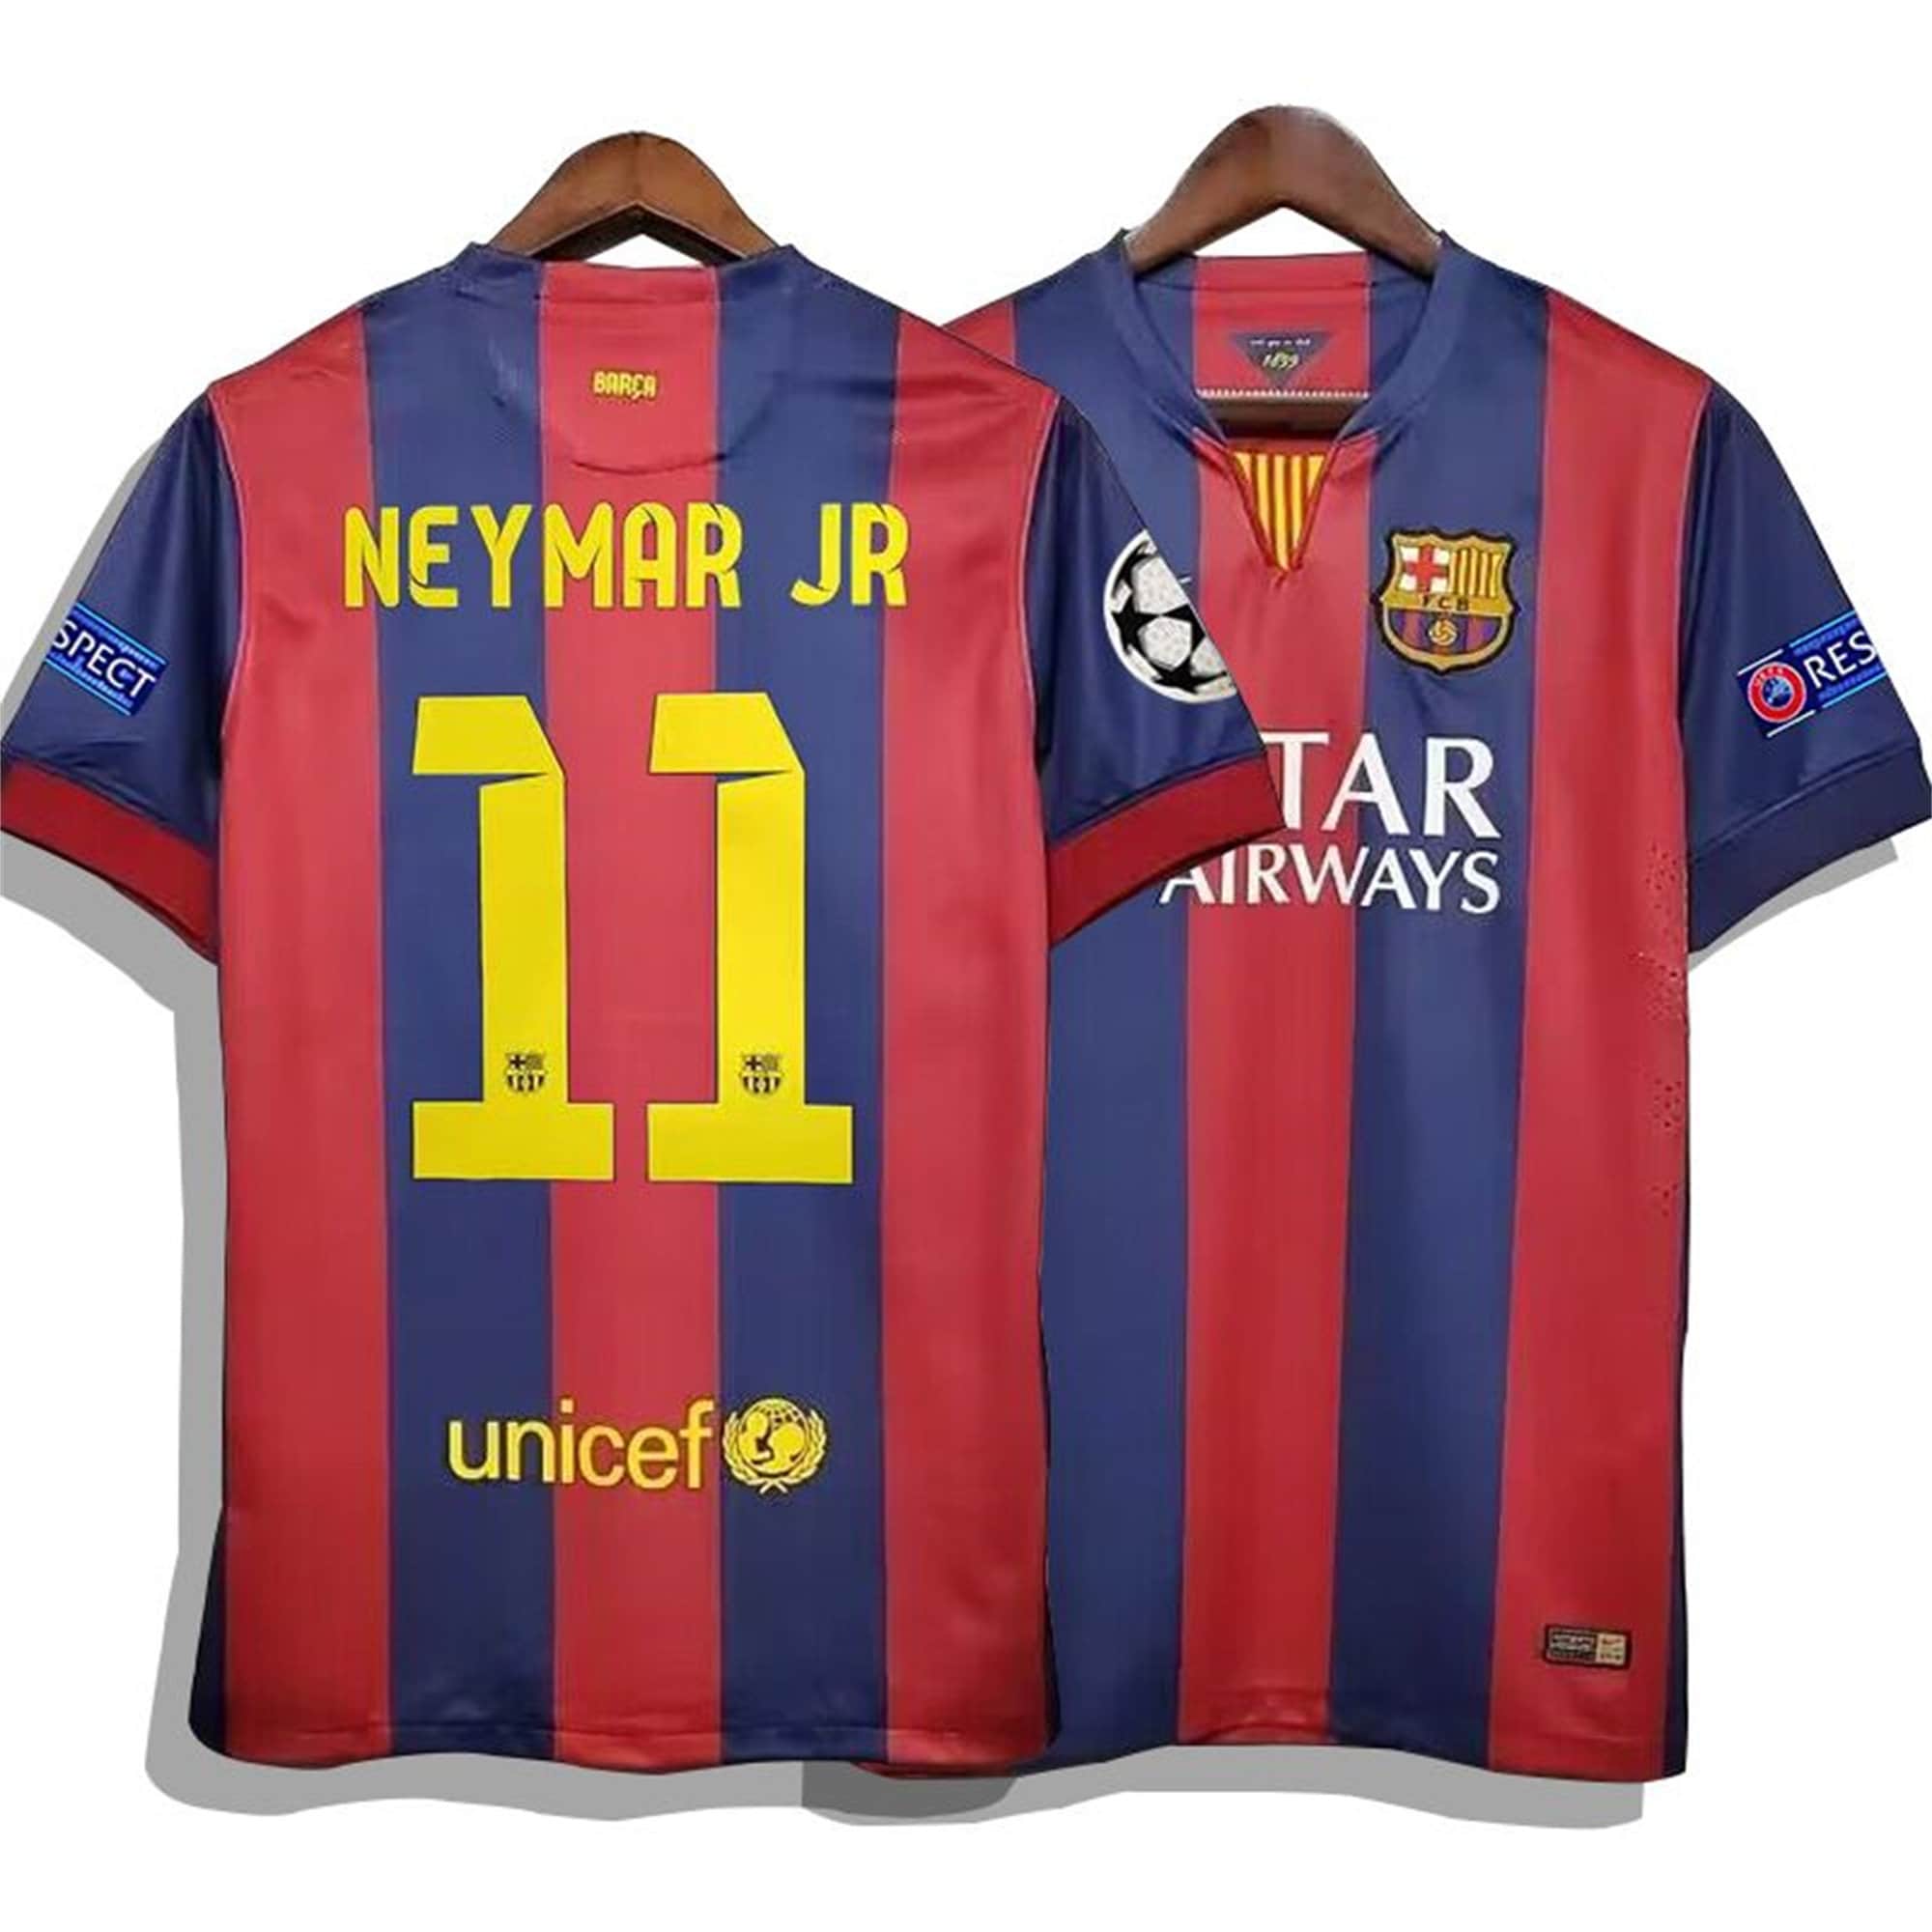 Sudadera roja Barça + Cruyff – Barça Official Store Spotify Camp Nou